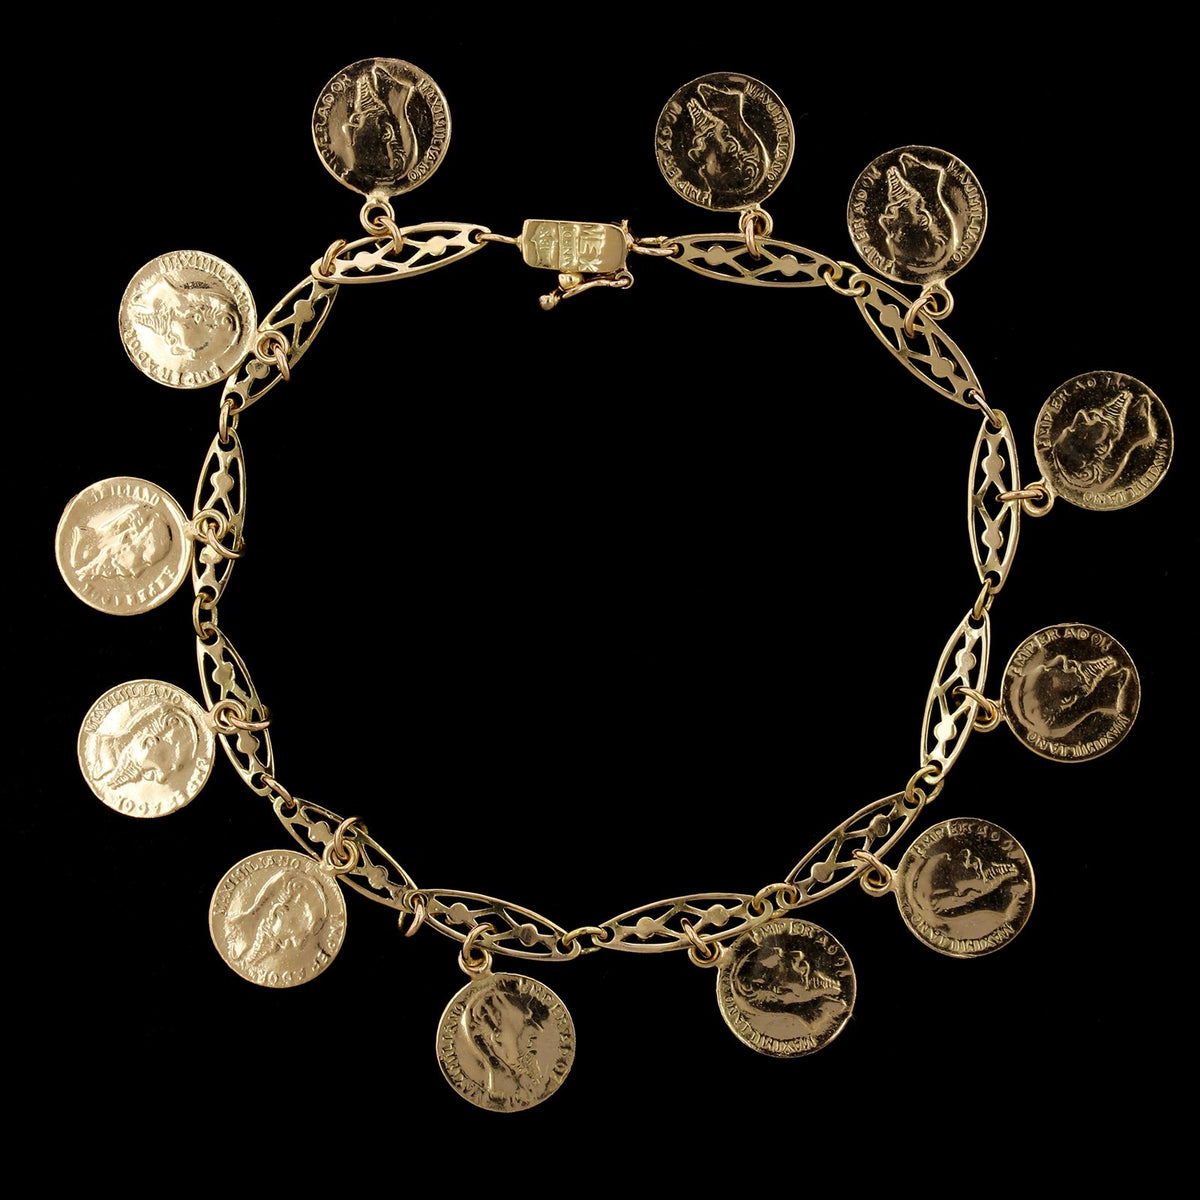 18K Yellow Gold Estate Coin Style Charm Bracelet